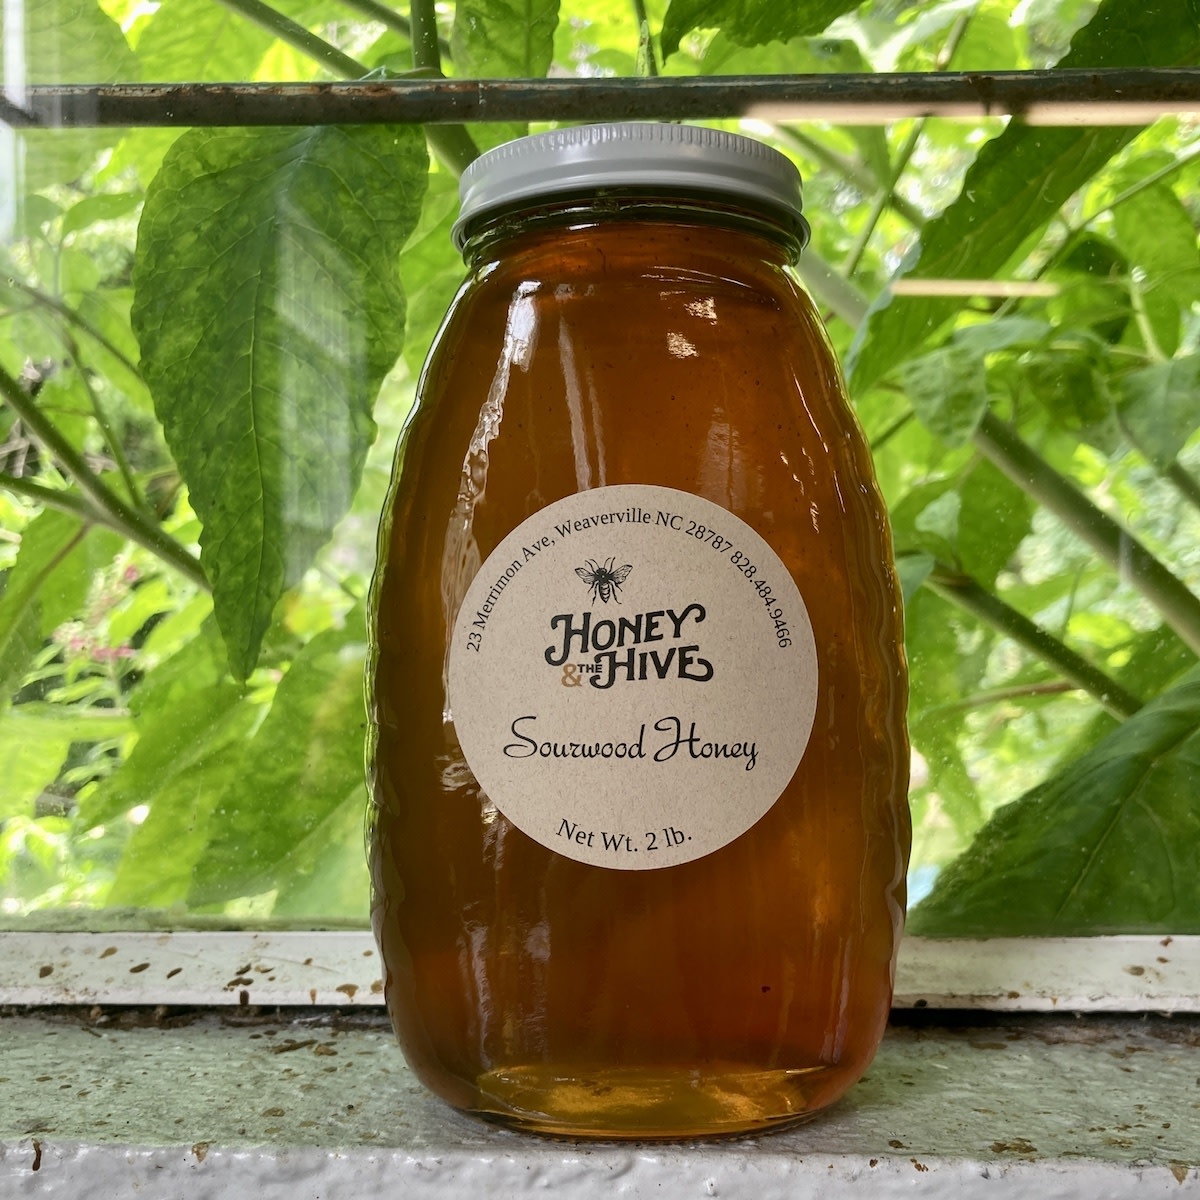 Honey & the Hive Local Sourwood Honey, classic queenline jar, 2 lbs. (907g)